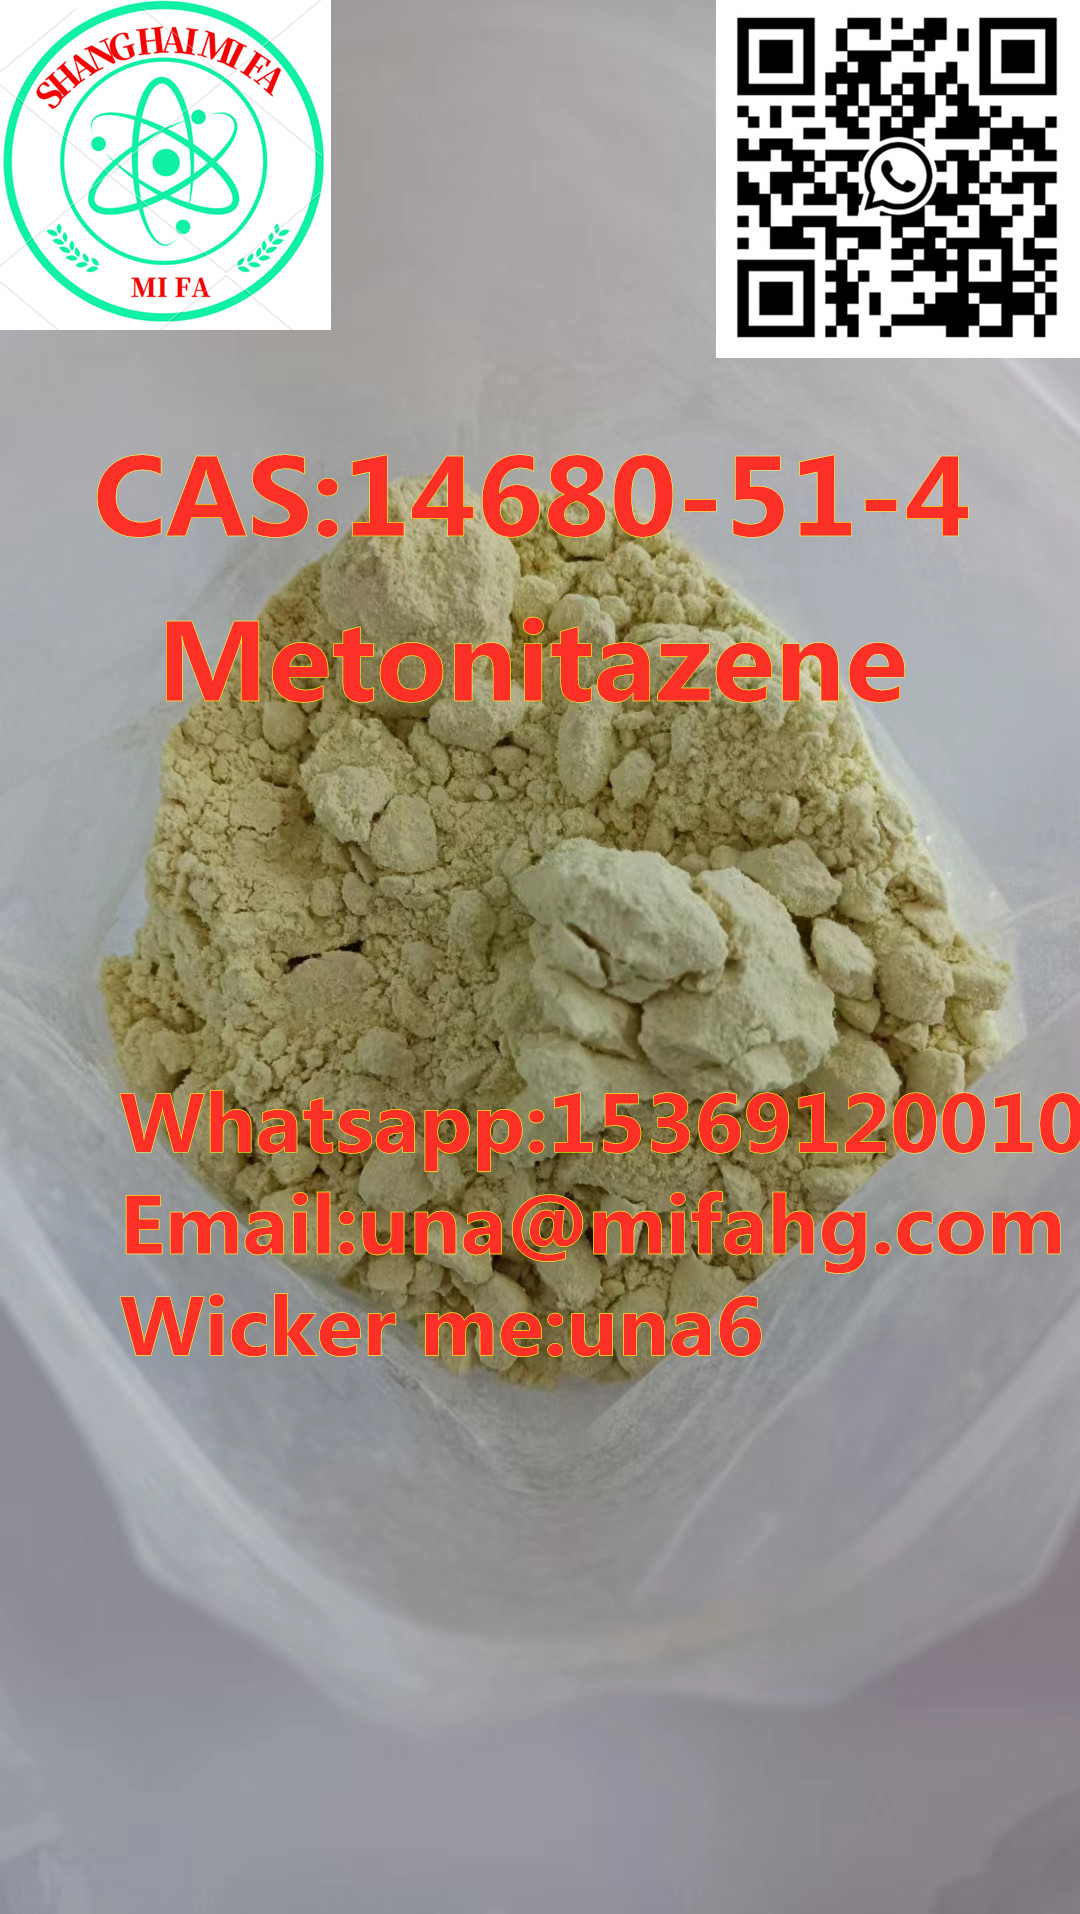 Safe delivery CAS:14680-51-4 Metonitazene